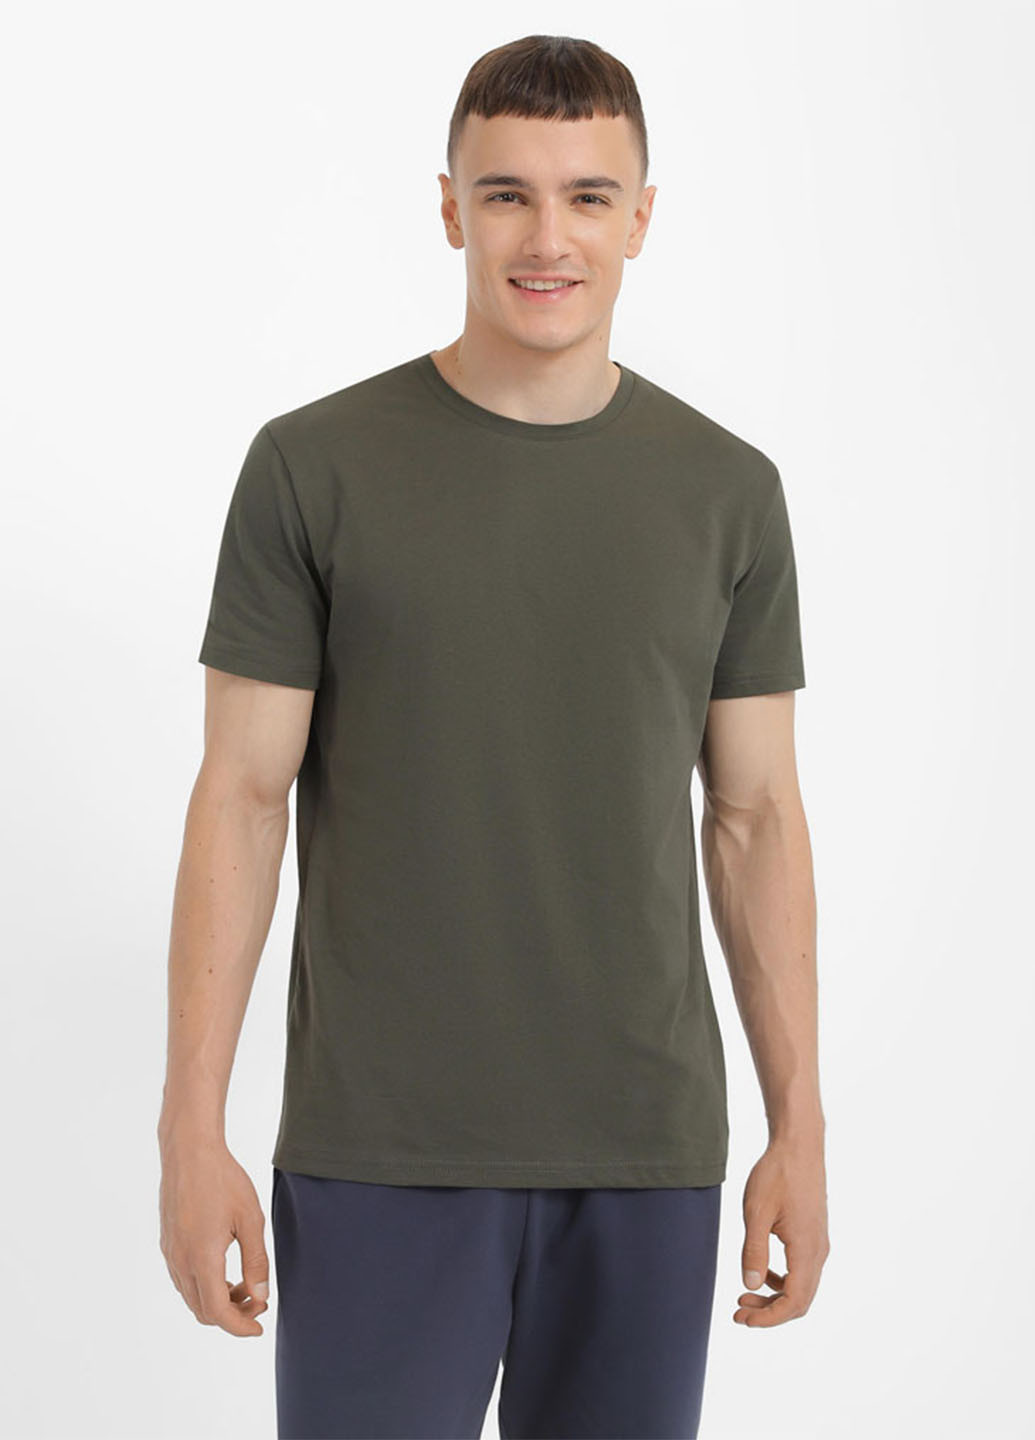 Хаки (оливковая) футболка Promin